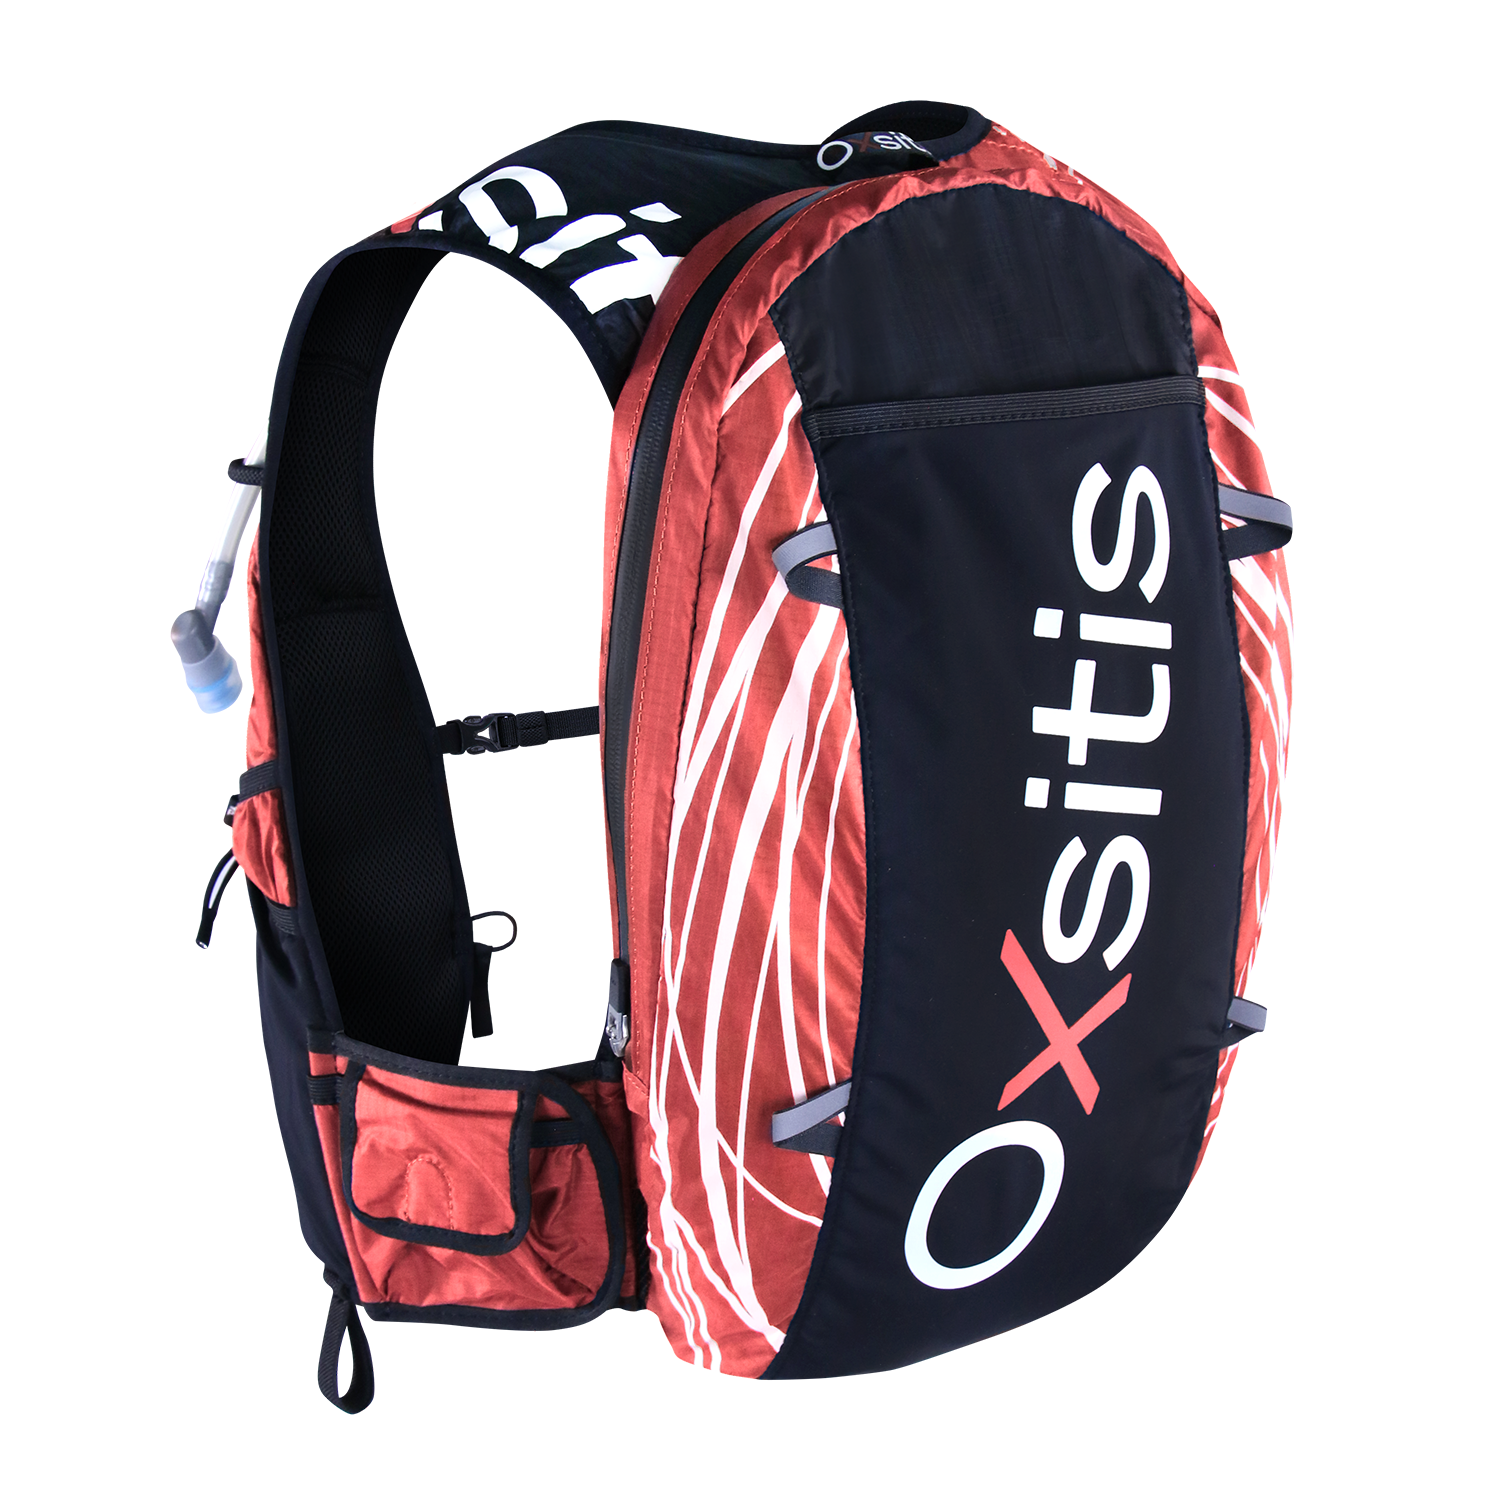 Oxsitis Ace 16 - Trail running backpack - Women's